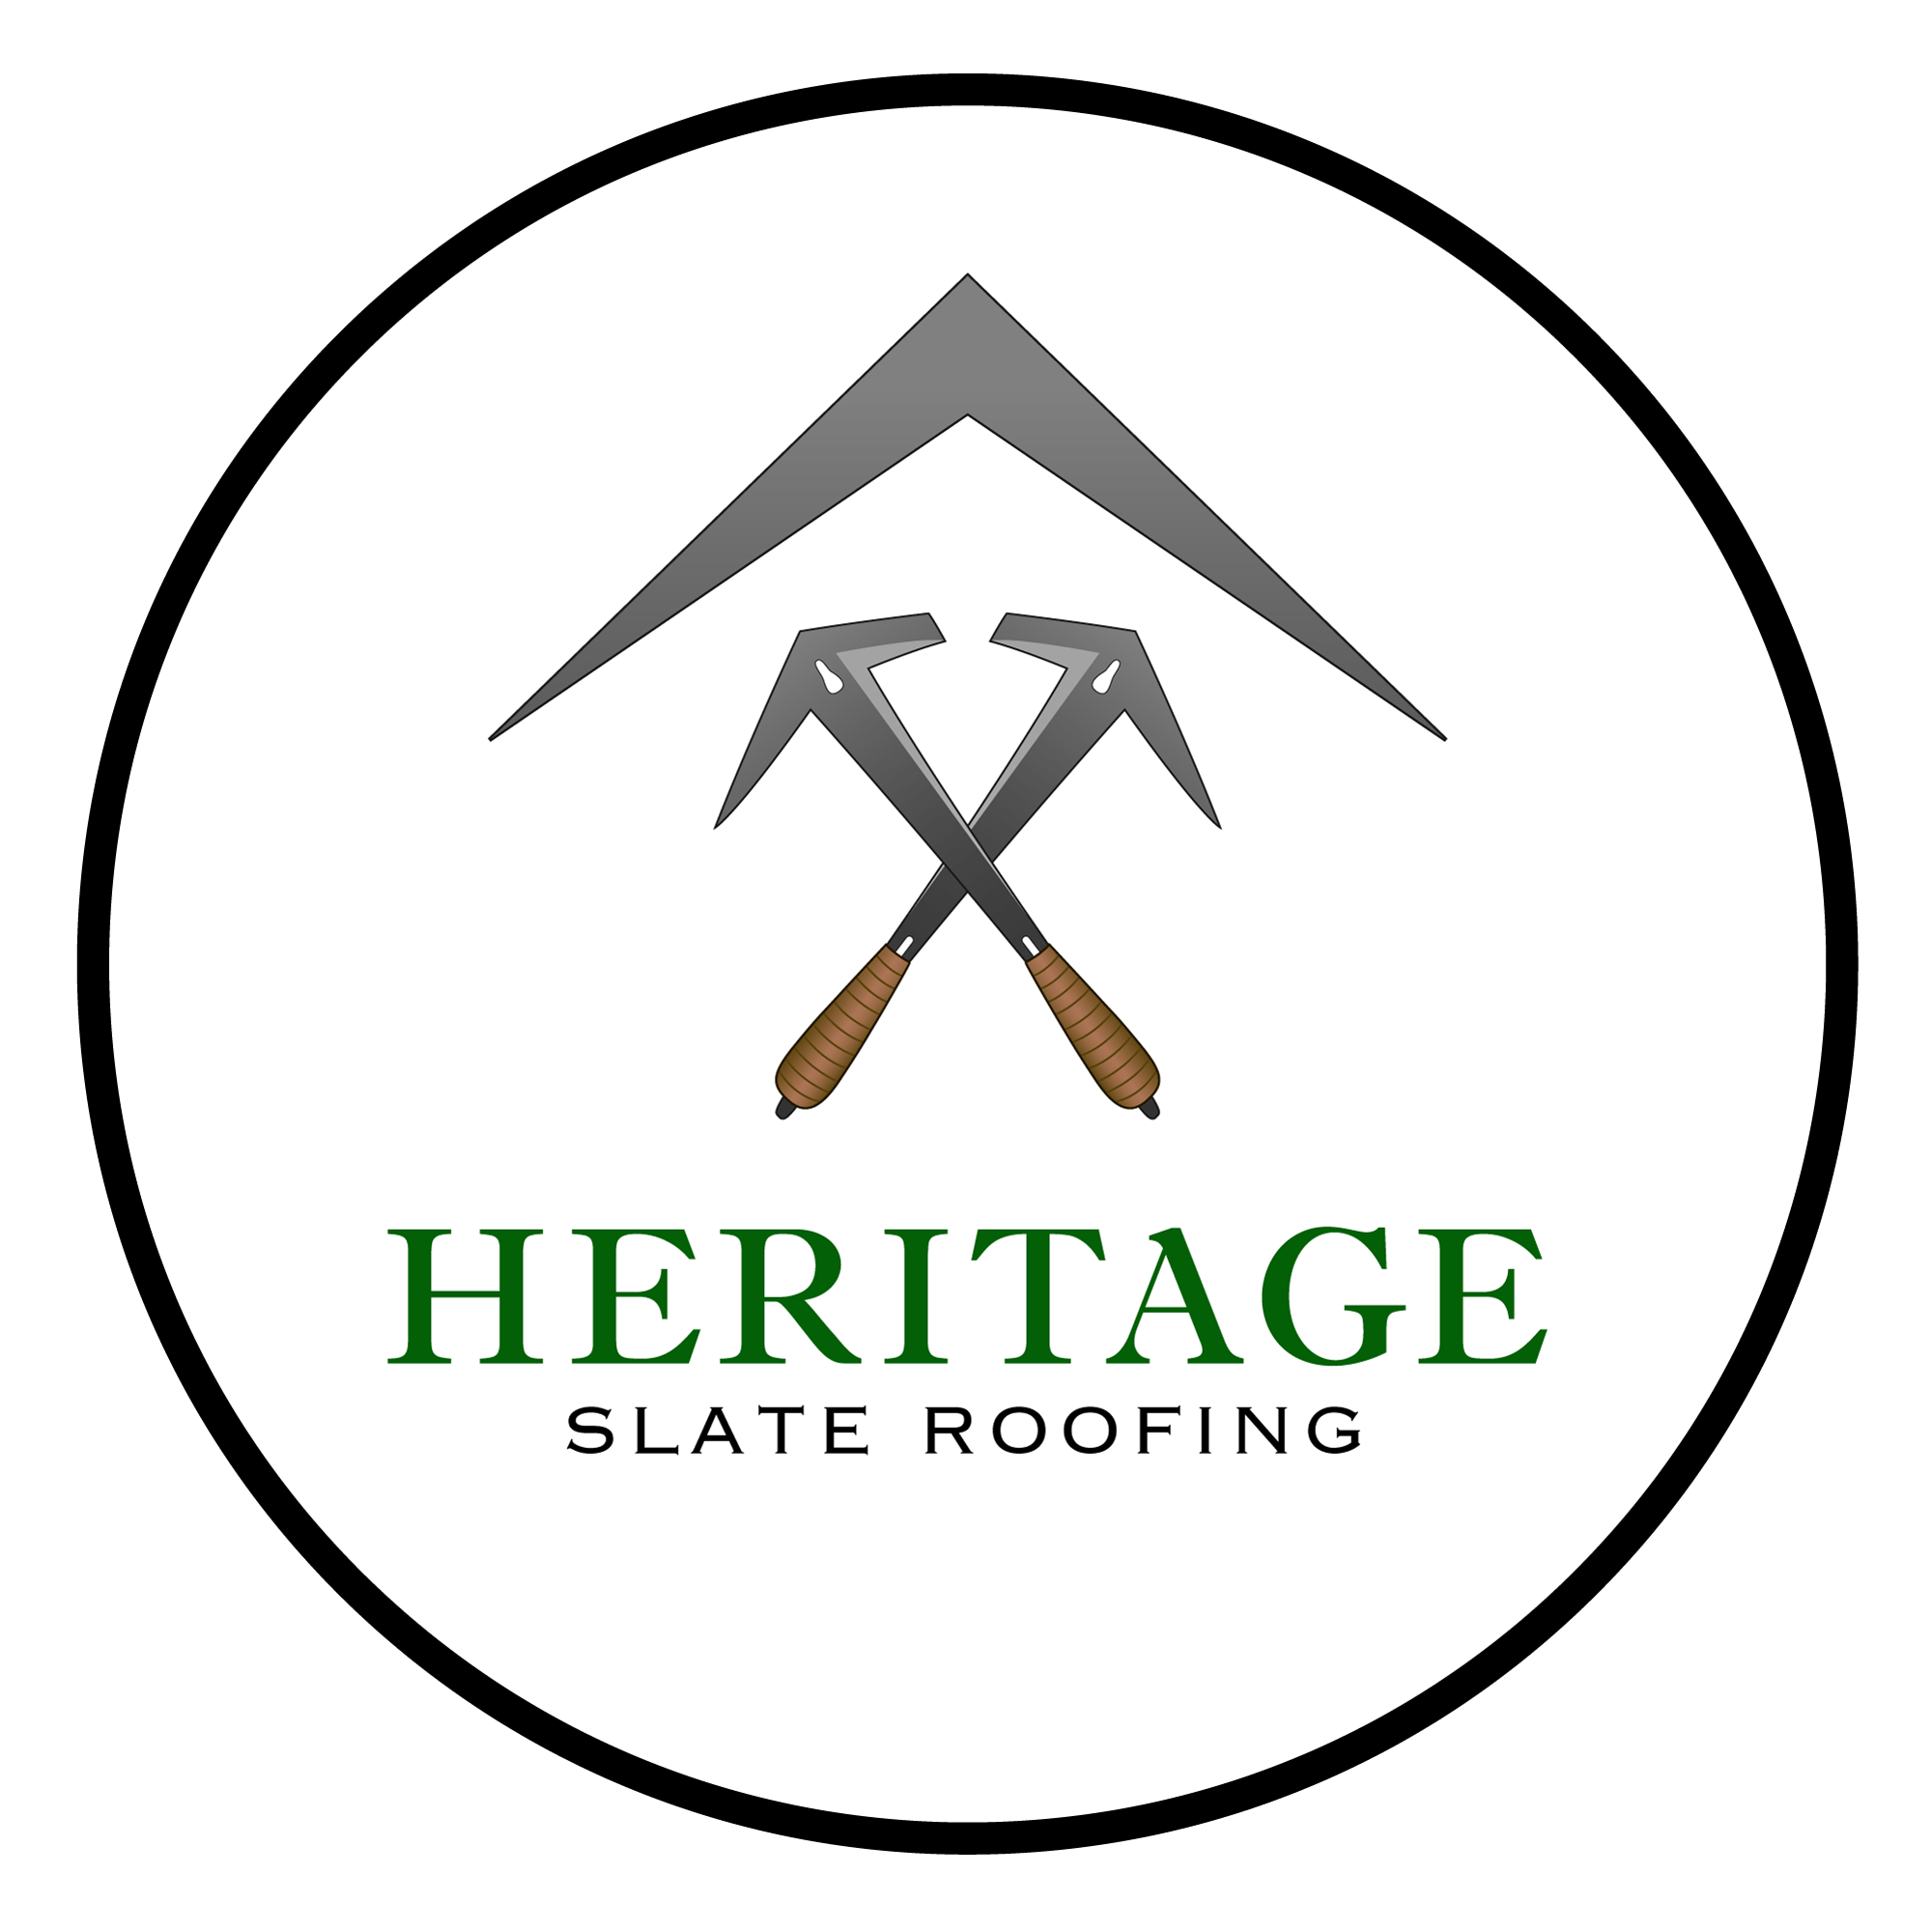 Heritage Slate Roofing